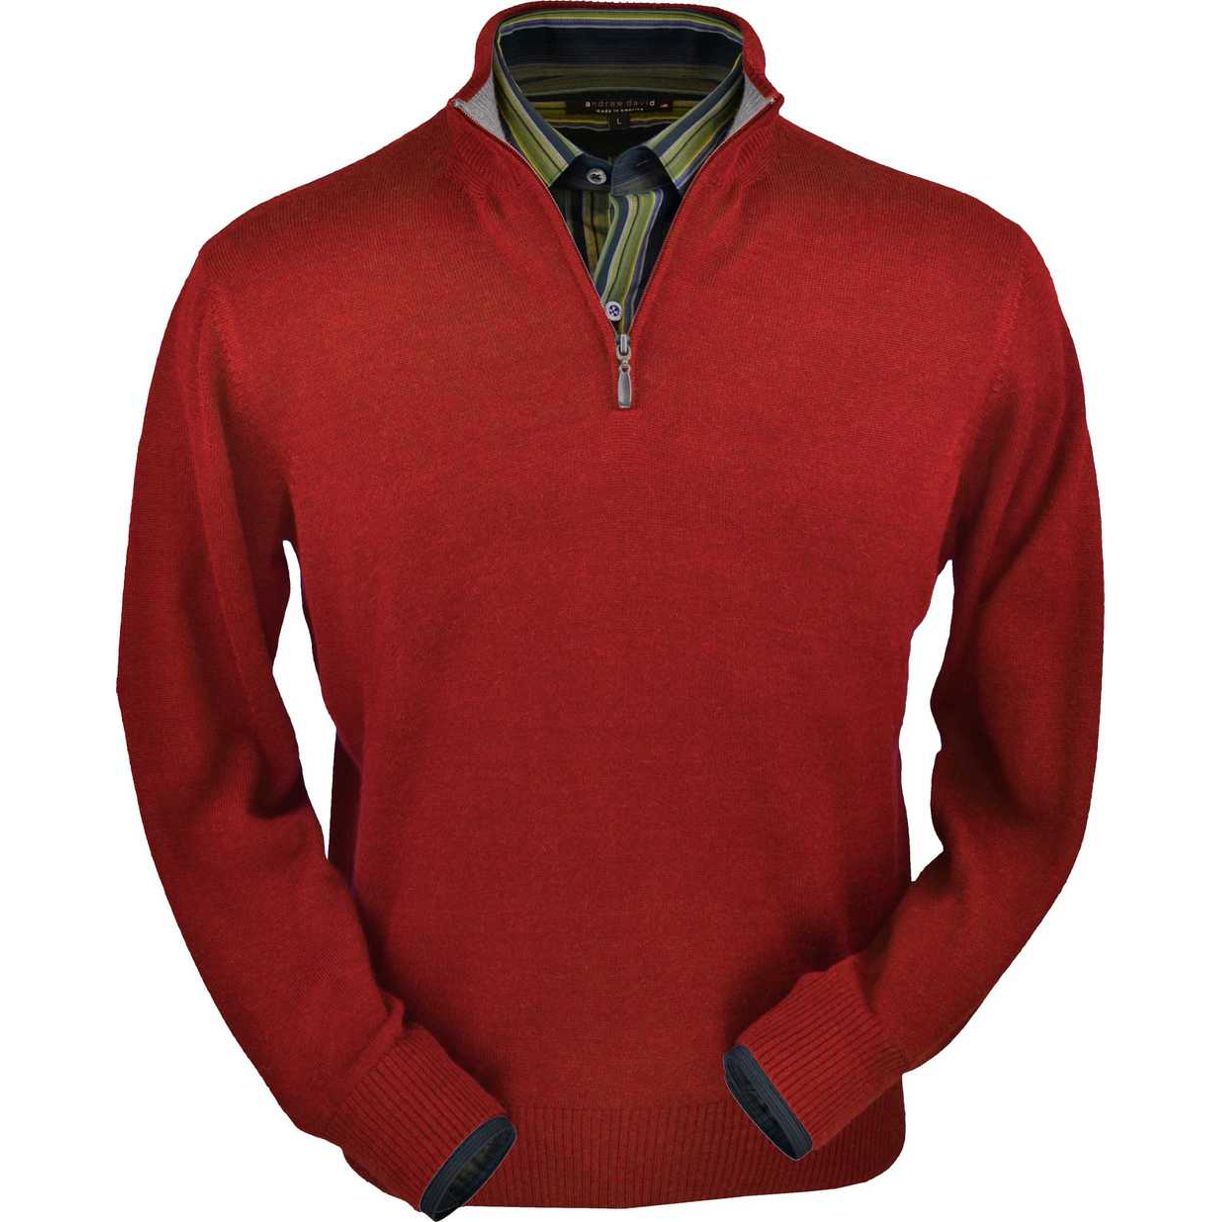 Royal Alpaca Half-Zip Mock Neck Sweater in Red by Peru Unlimited